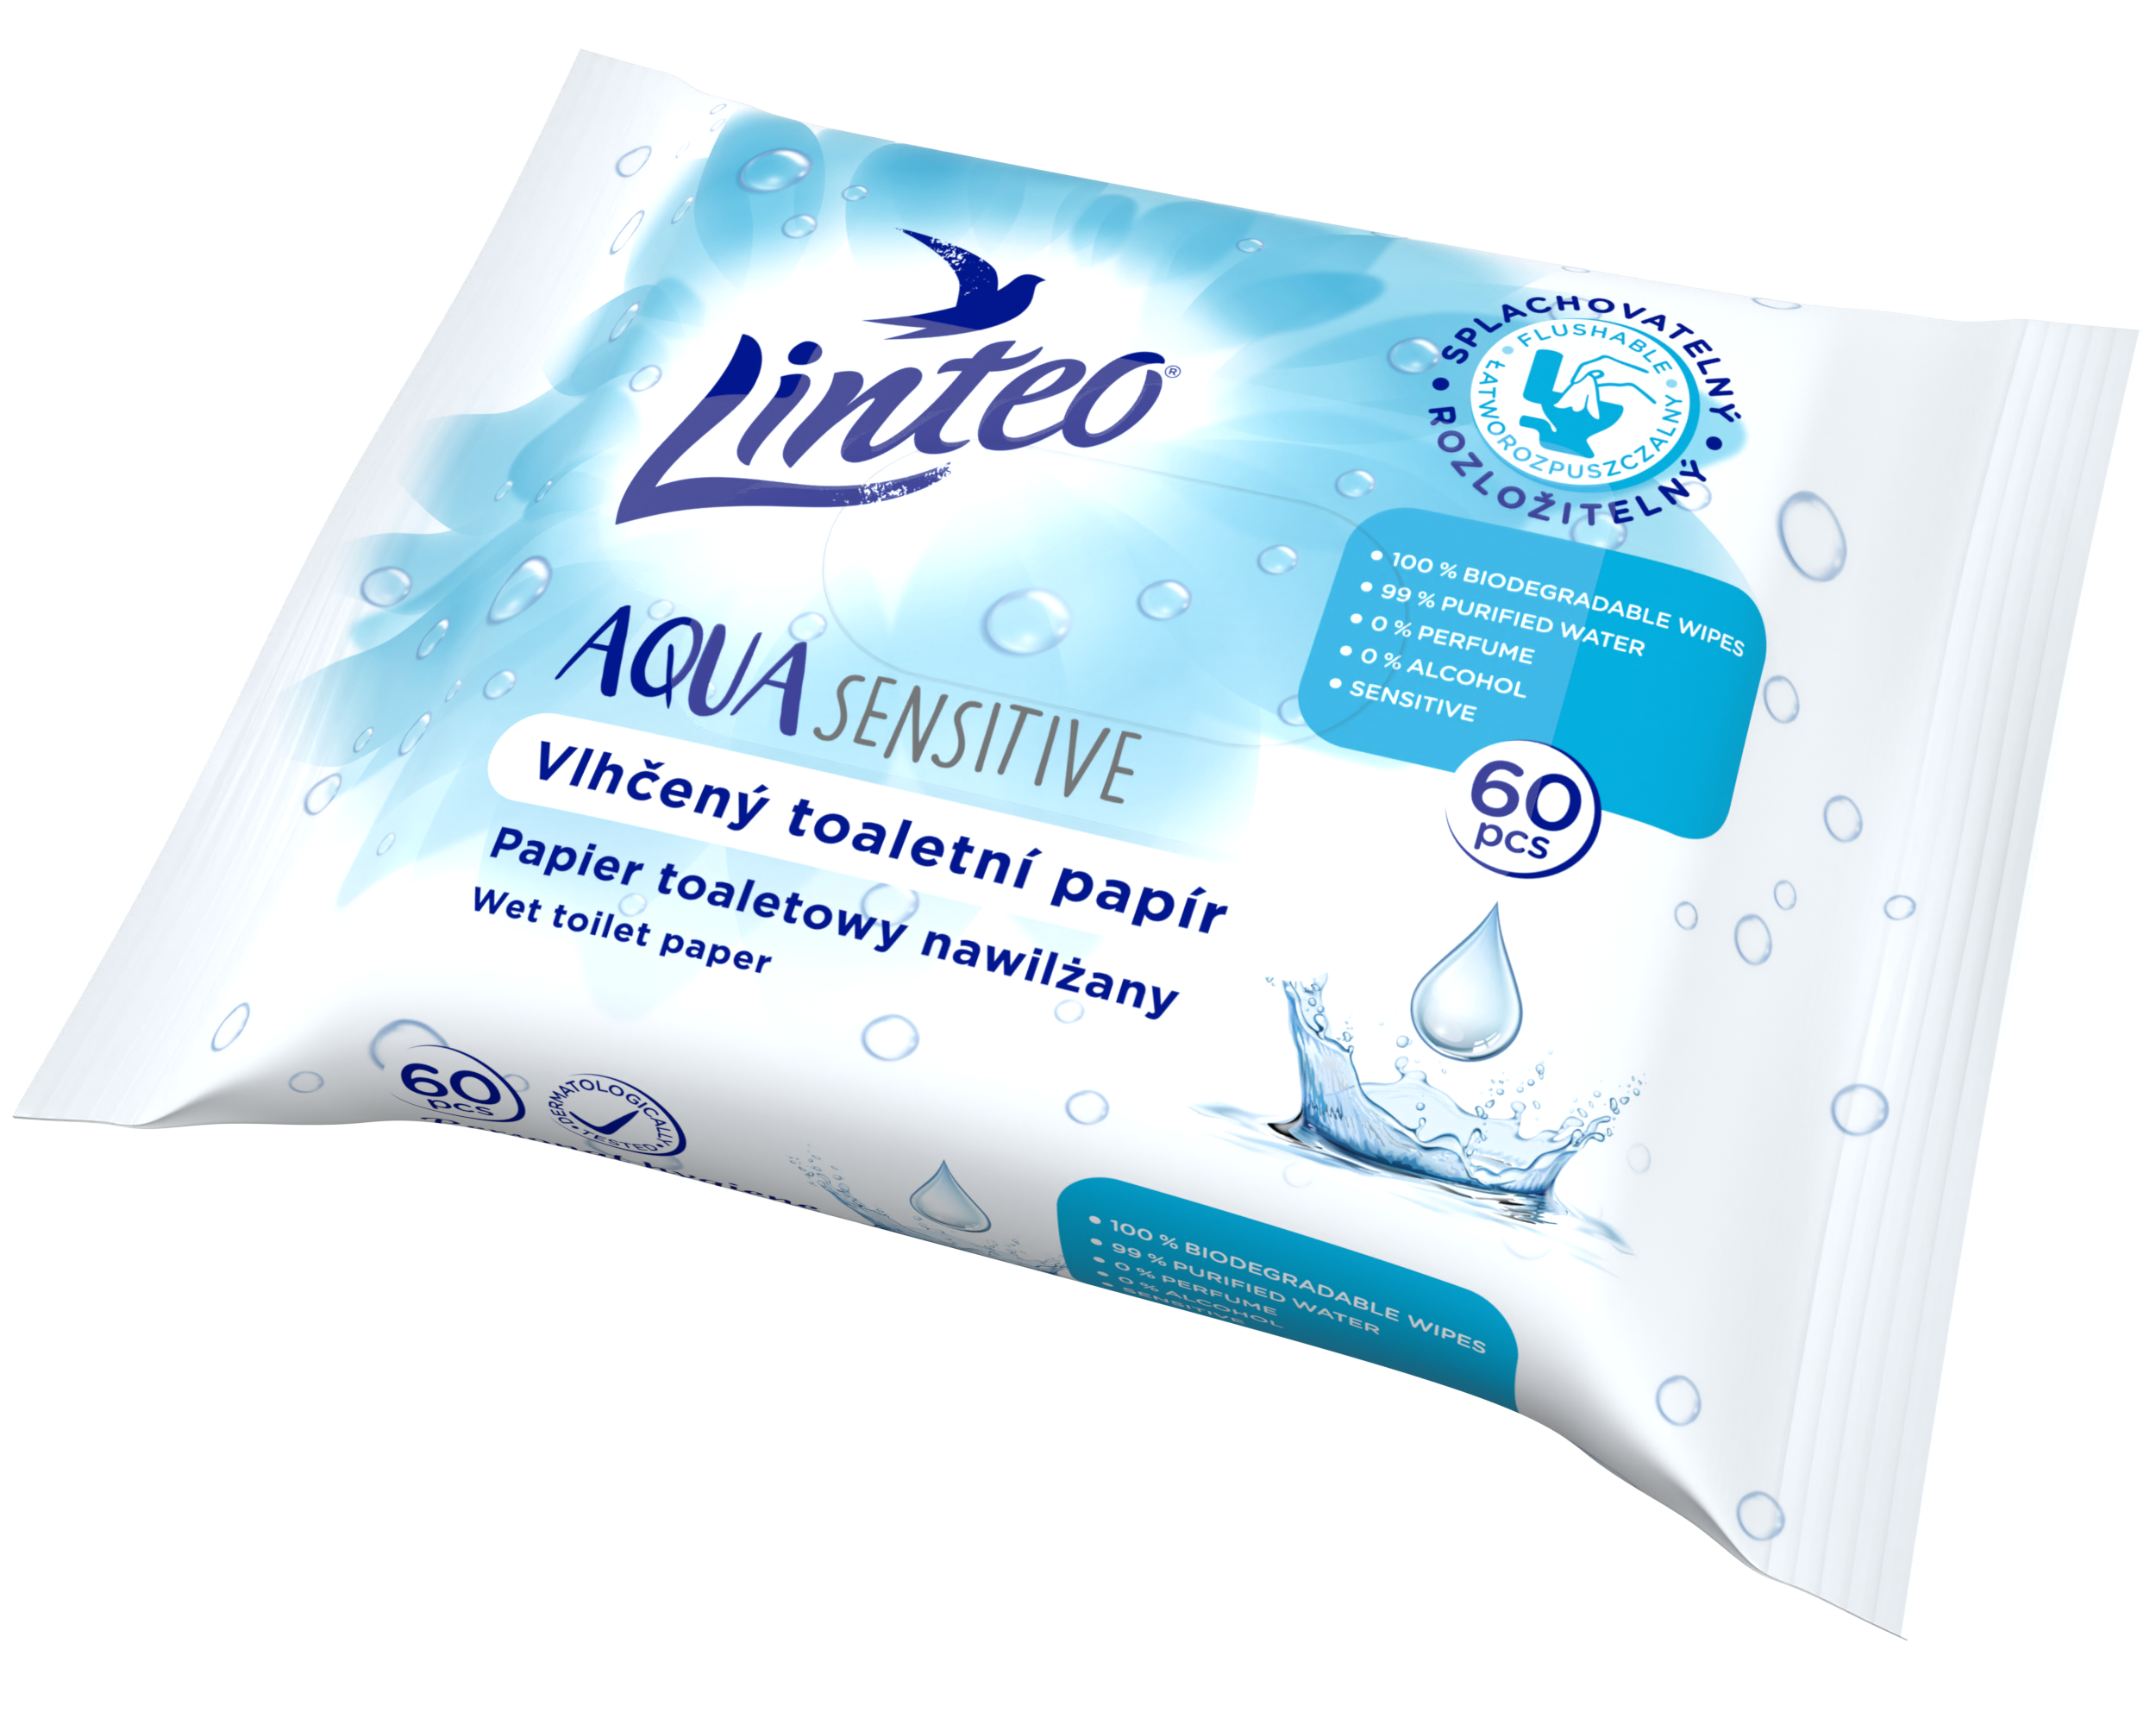 Linteo Aqua Sensitive papier toilette humide